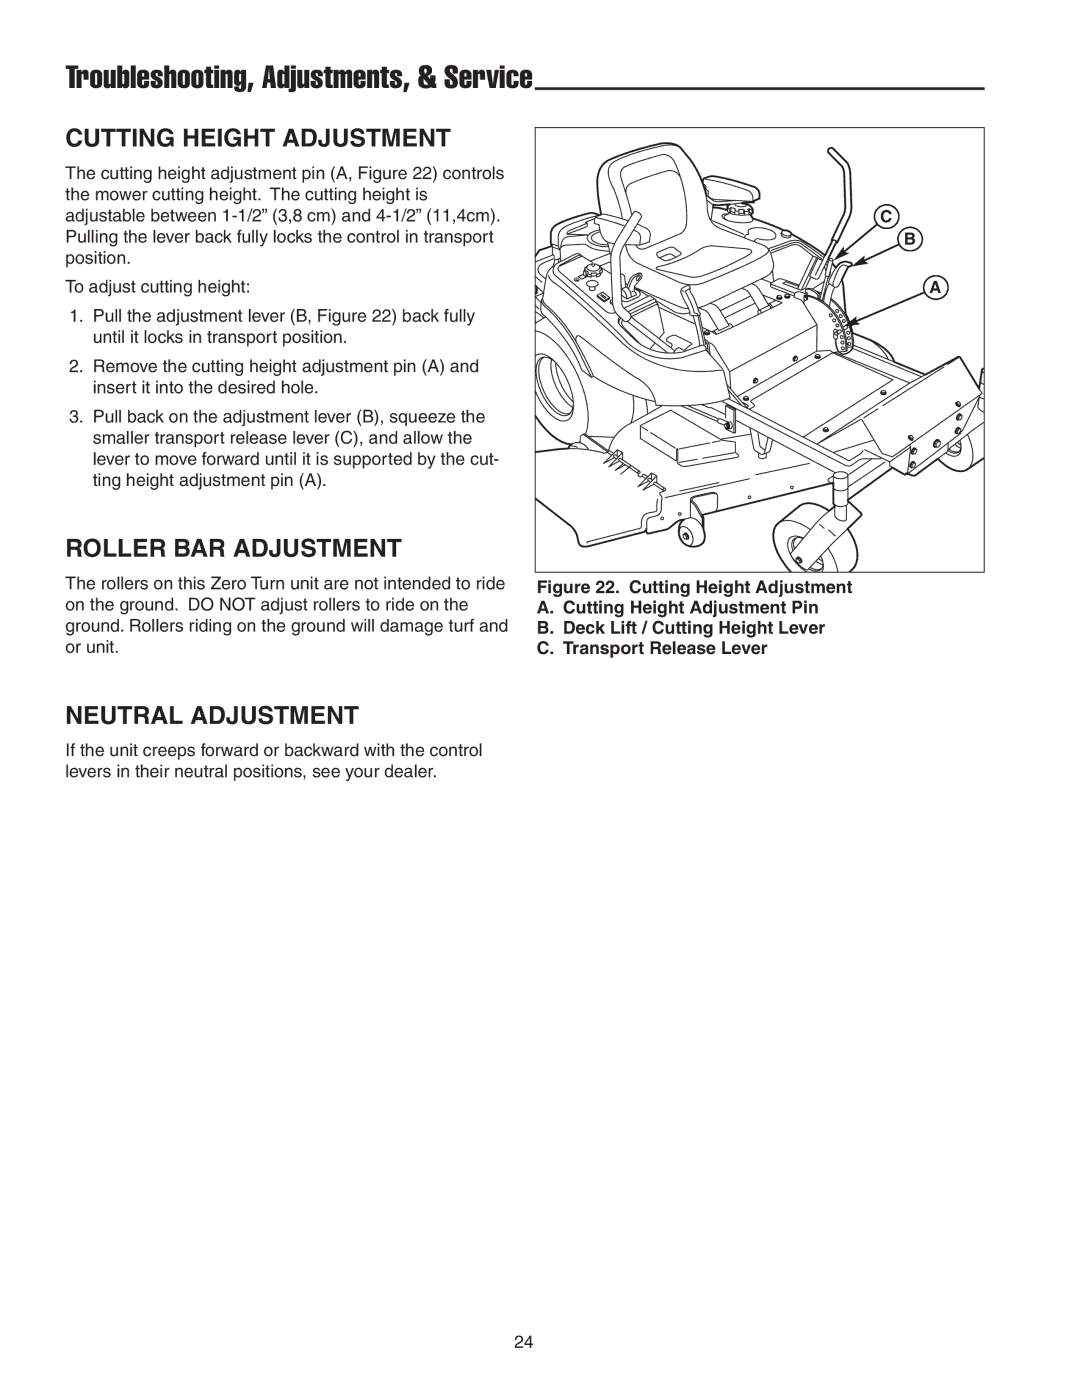 Snapper 18HP, 19HP manual Cutting Height Adjustment, Roller BAR Adjustment, Neutral Adjustment 